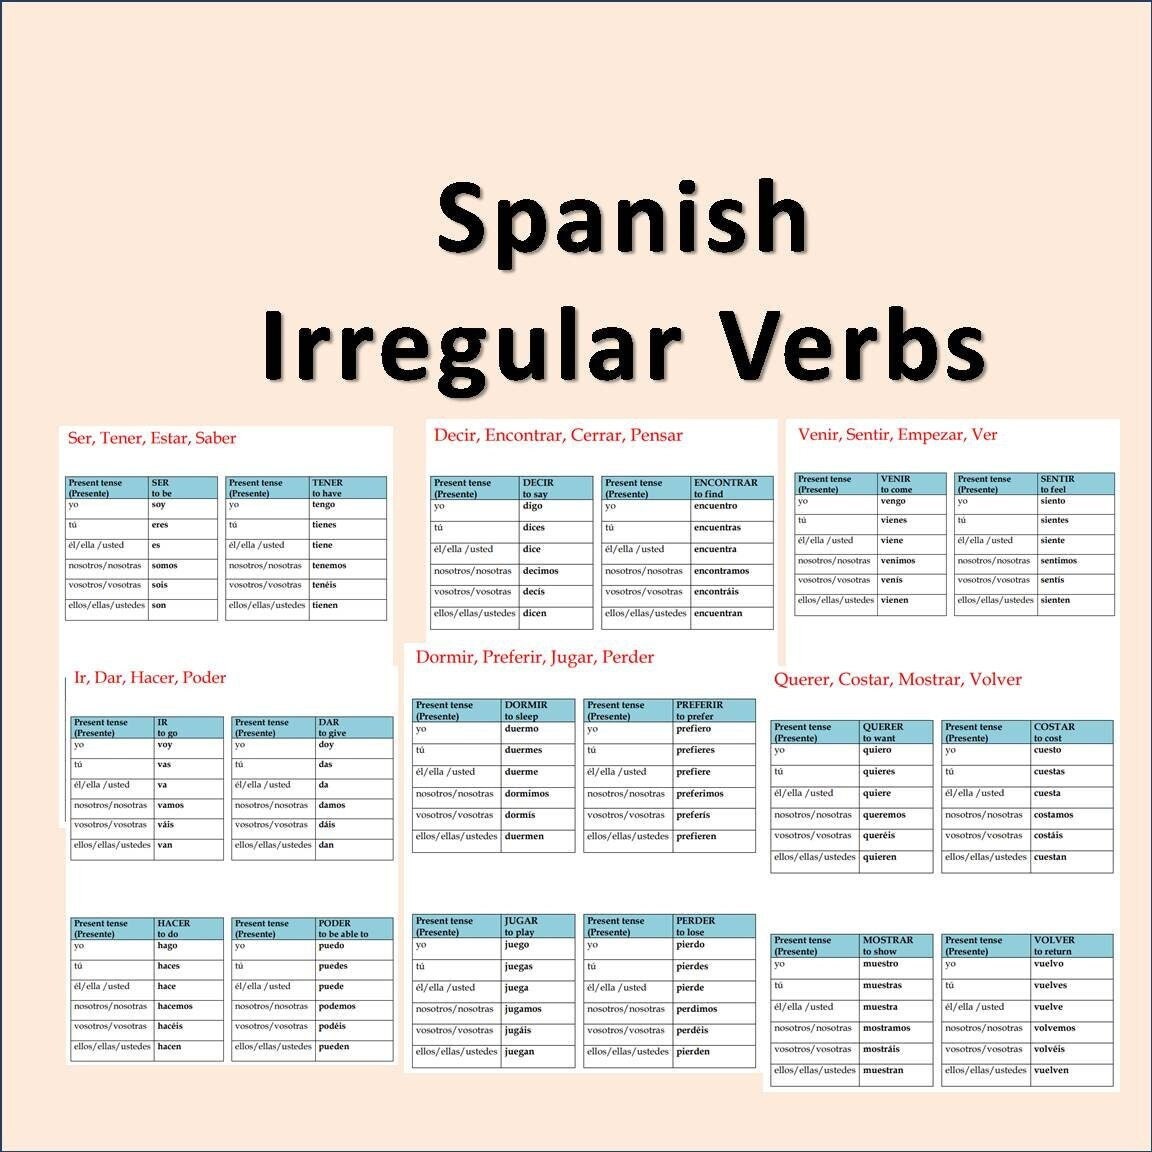 ENCONTRAR - Indicative Spanish Verb Conjugation Chart